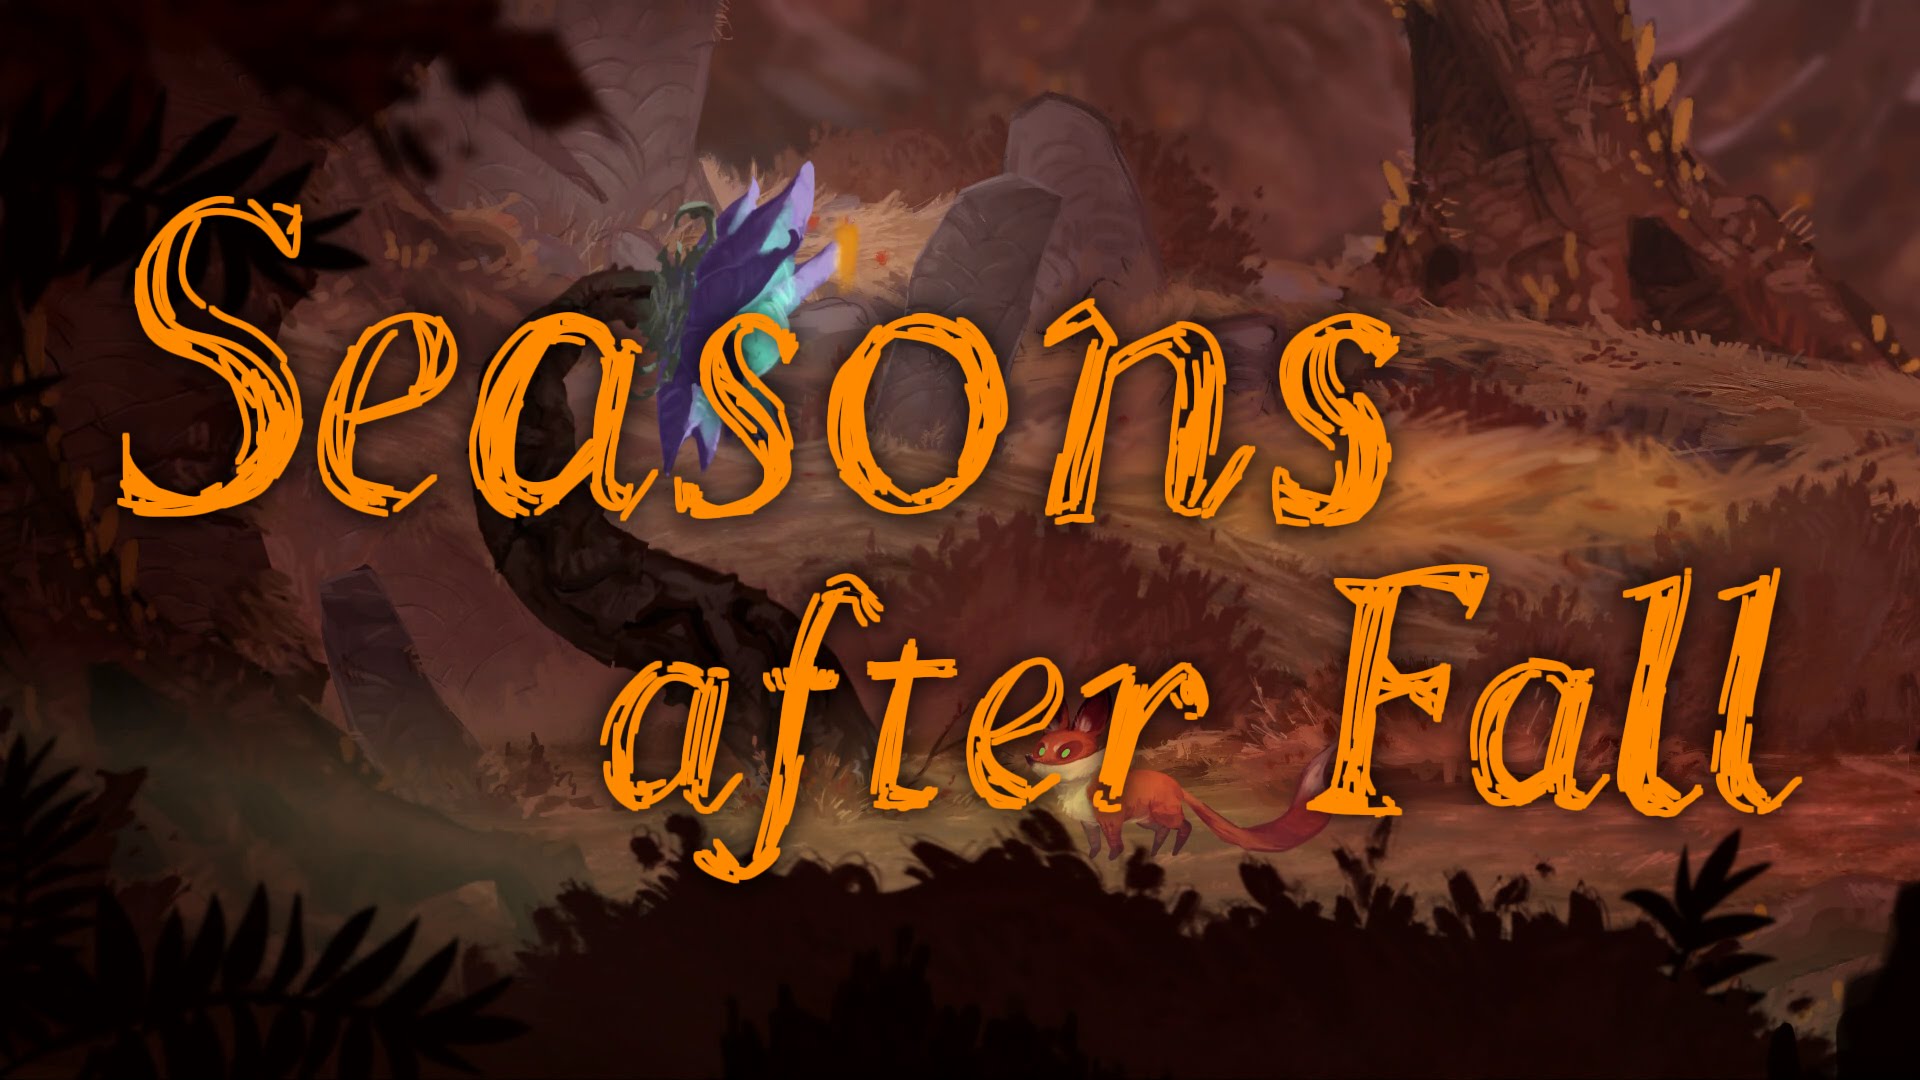 jaquette du jeu vidéo Seasons after Fall